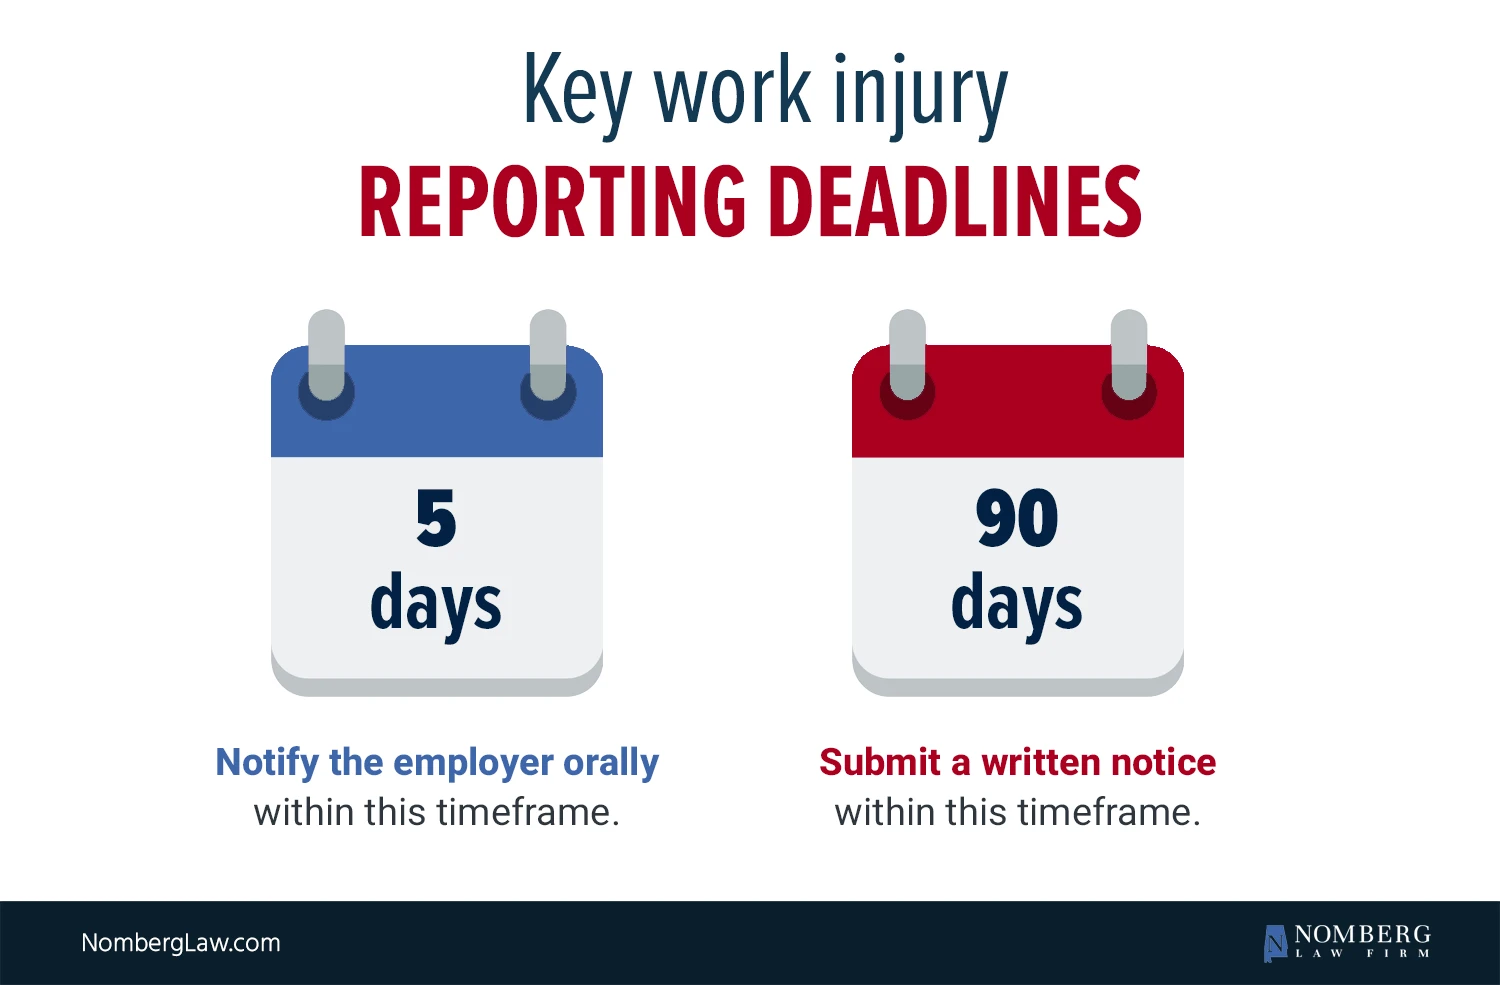 Key work injury reporting deadlines mini infographic